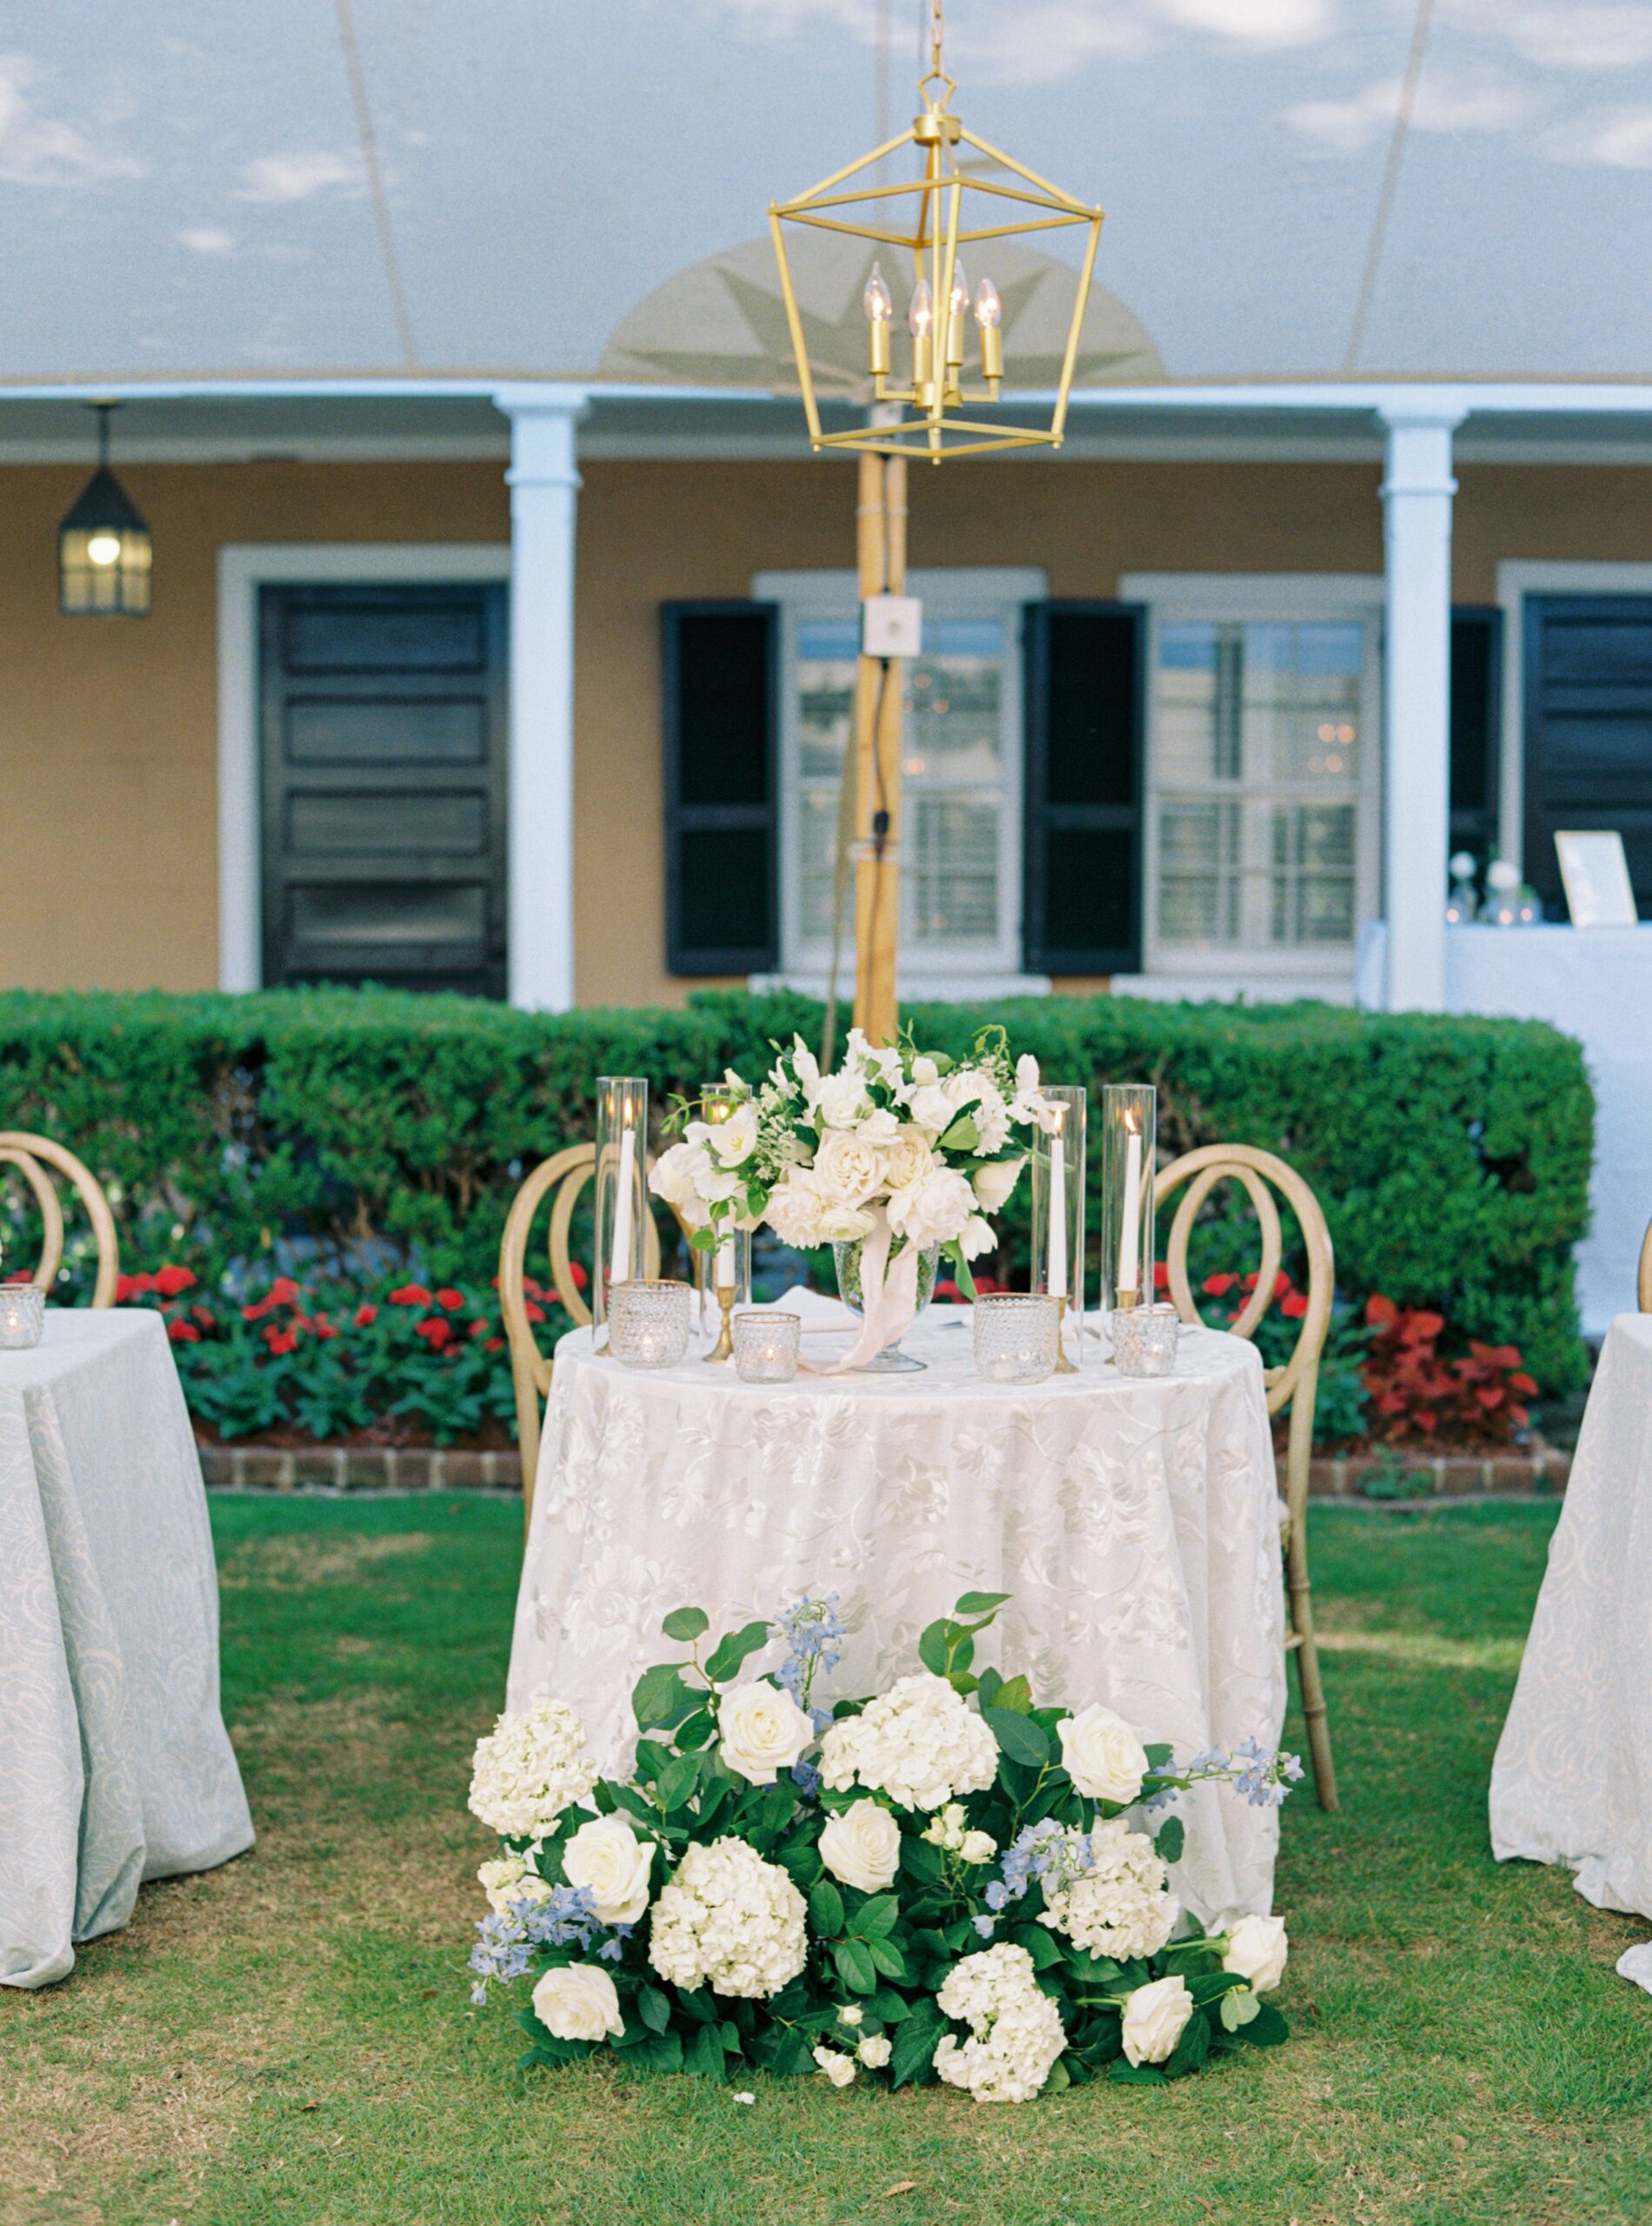 Sweetheart table outdoor wedding reception in Charleston.